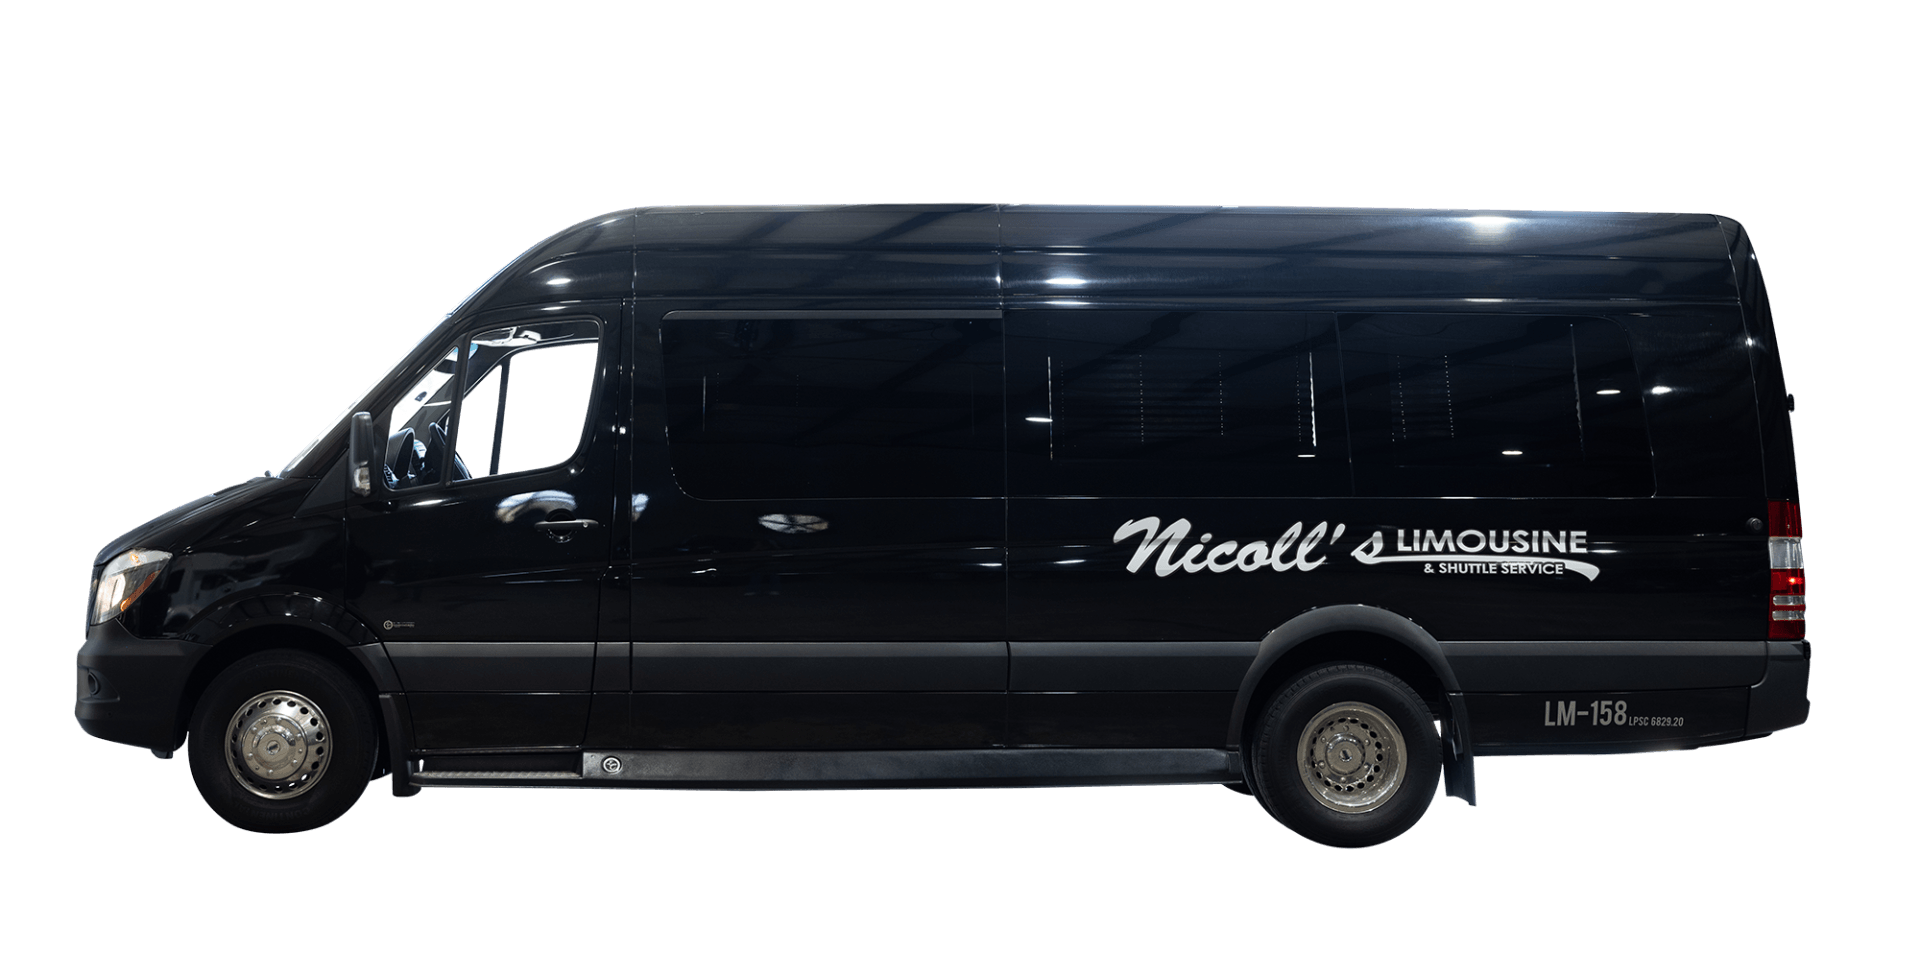 Nicoll's Limousine & Shuttle Service black shuttle vehicle - LM-158